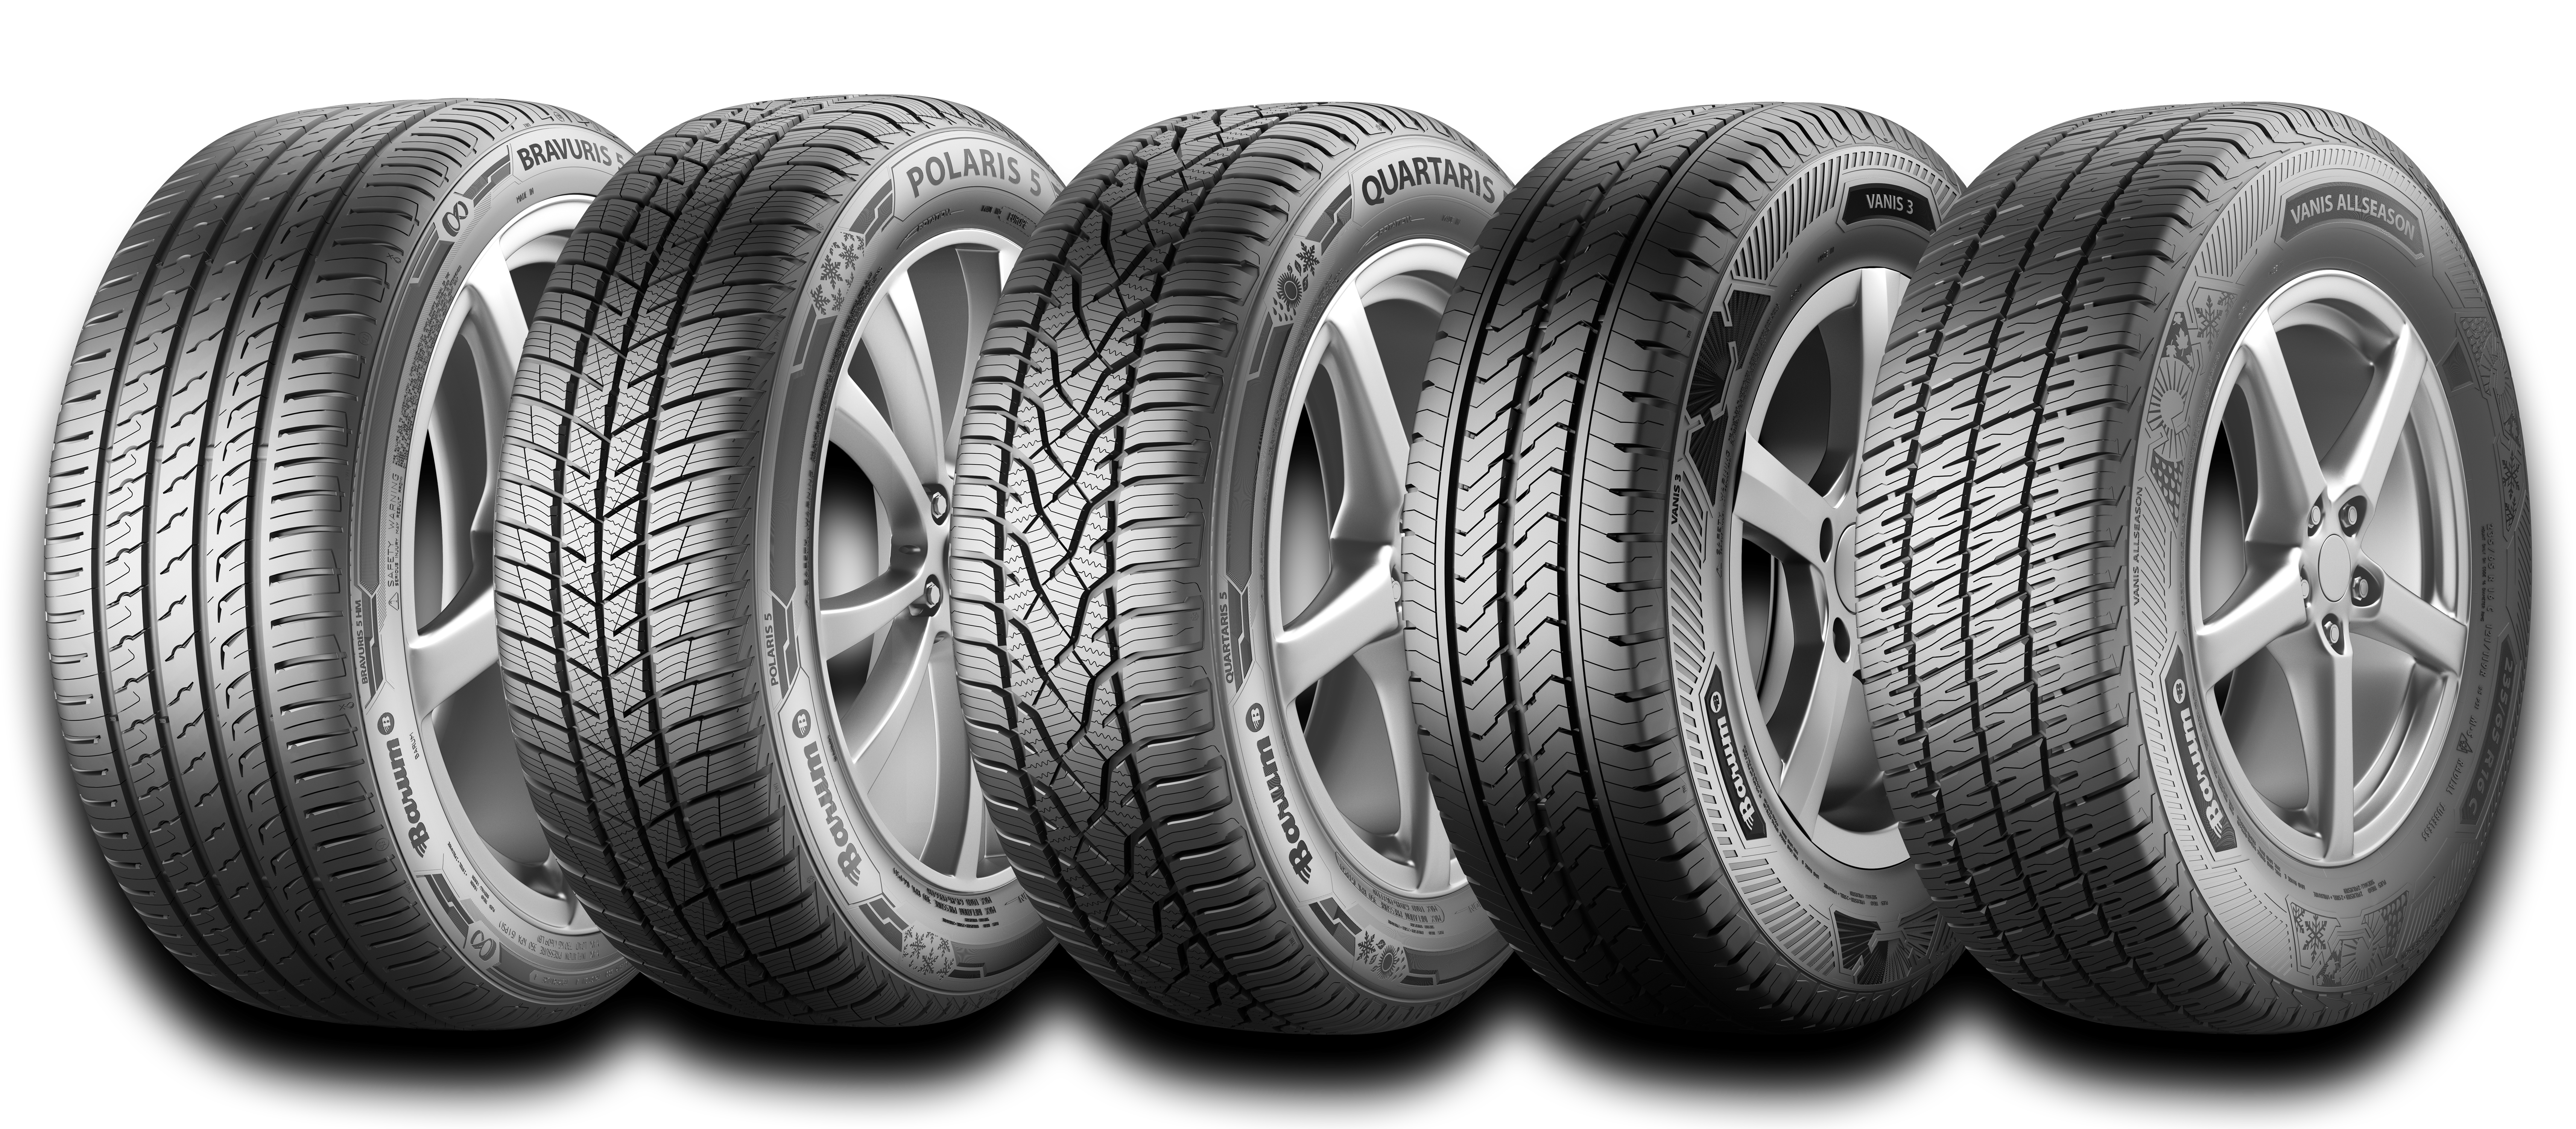 5 tyres of Barum in comparison 